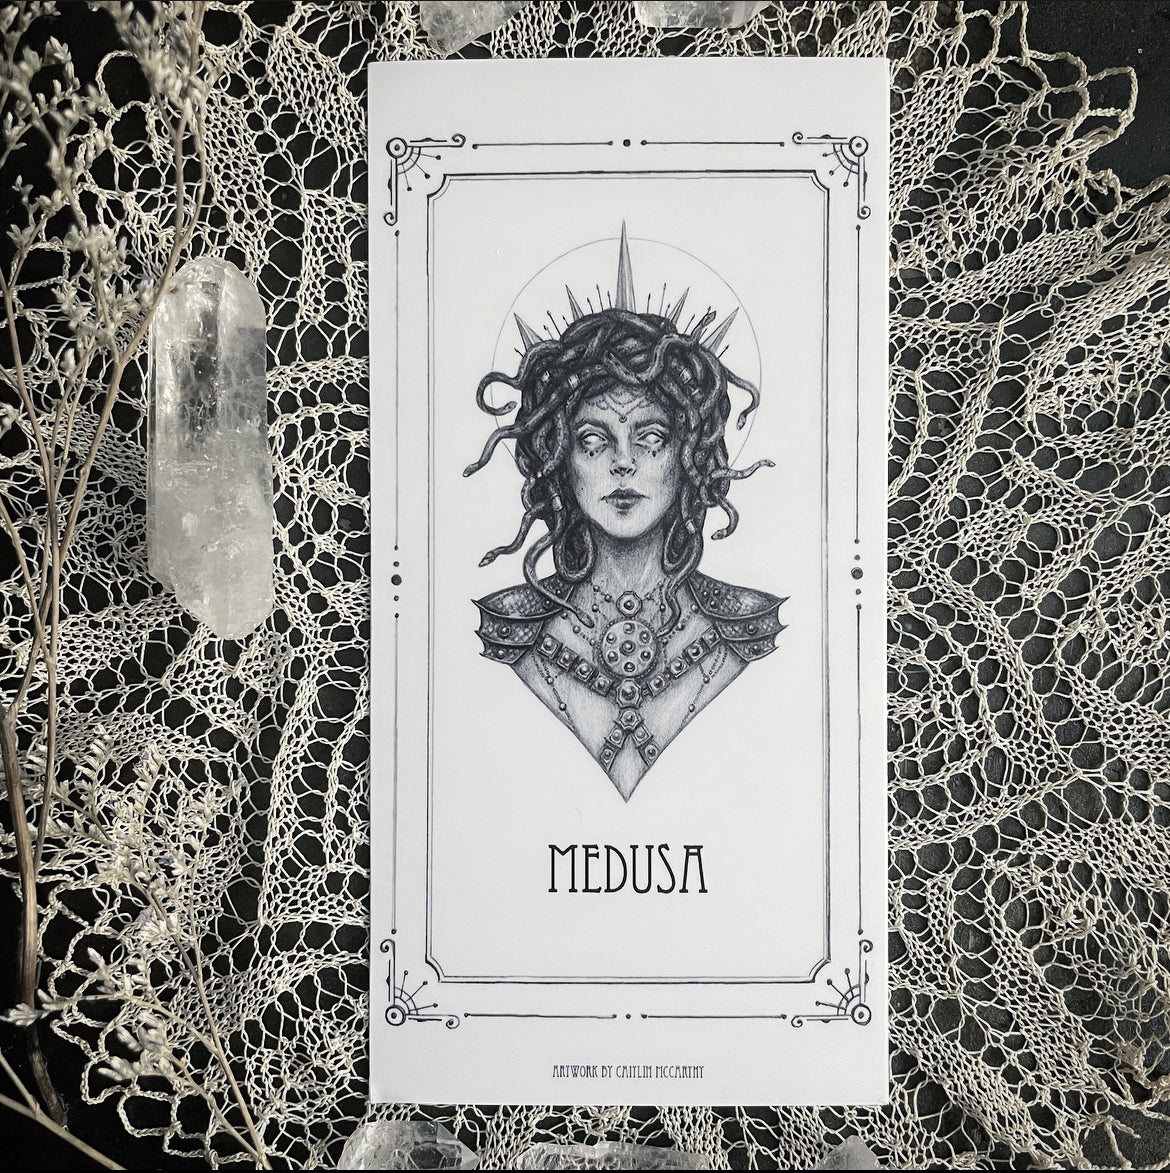 Medusa Devotional Candle Sticker - 3x6” High Quality Vinyl Sticker